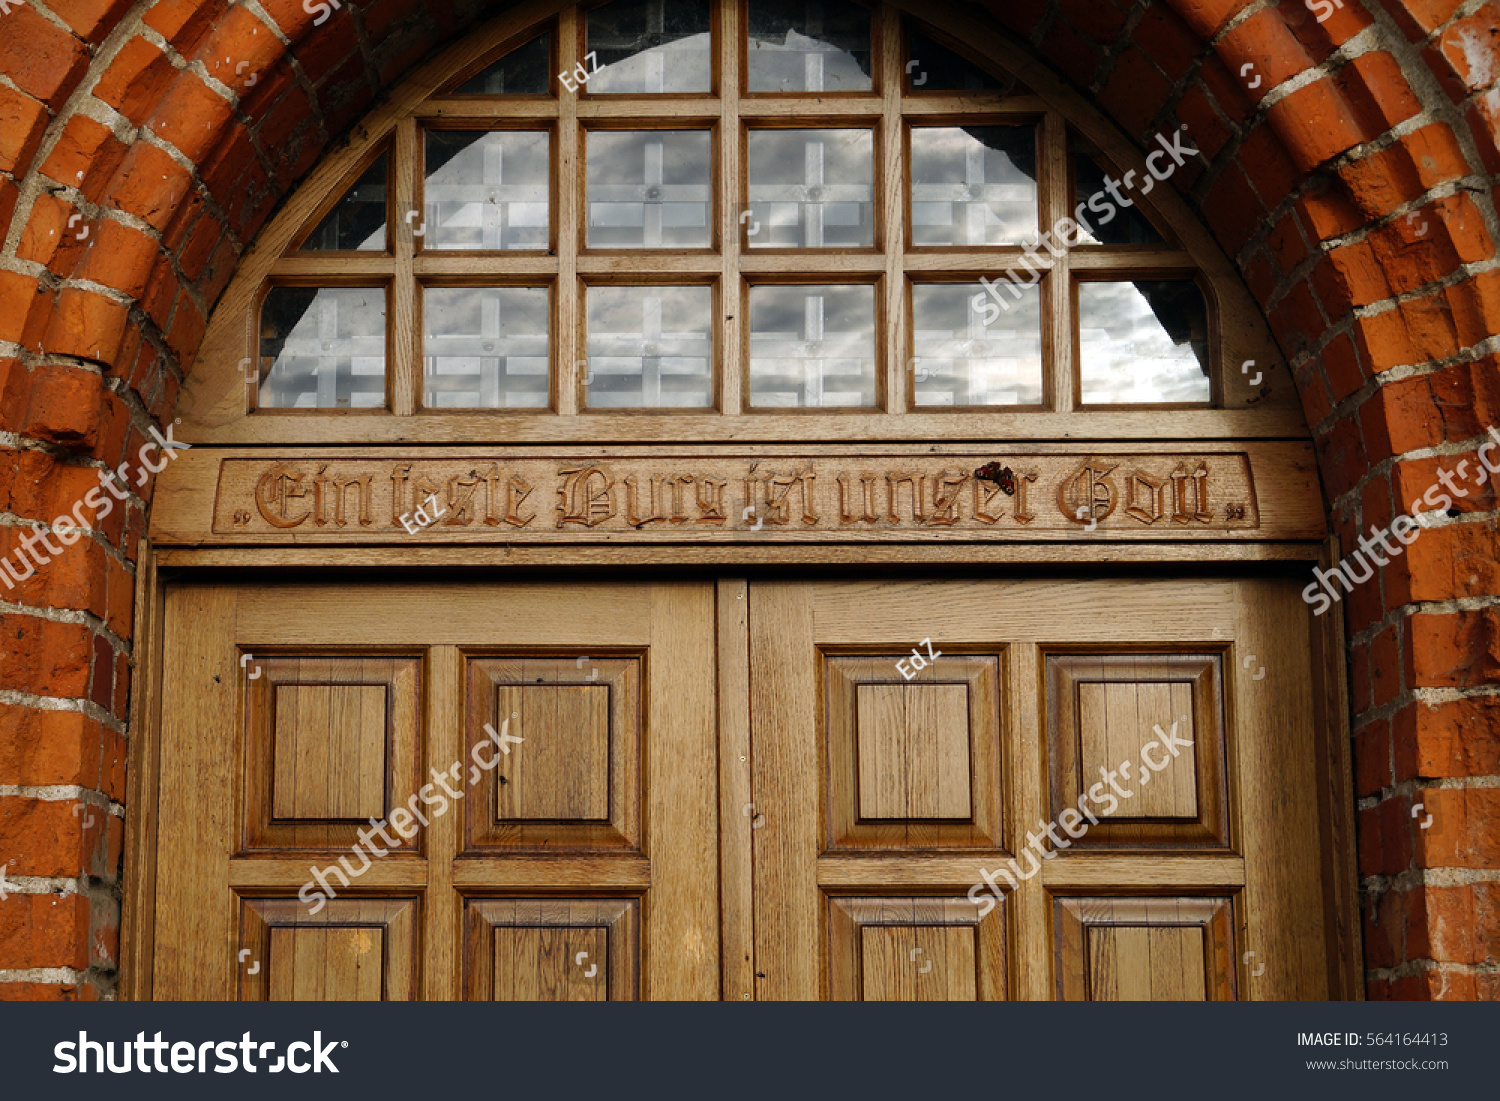 Inscription over door of order of Church: "Our God — bulwark" (Ein feste Burg ist unser Gott) #564164413